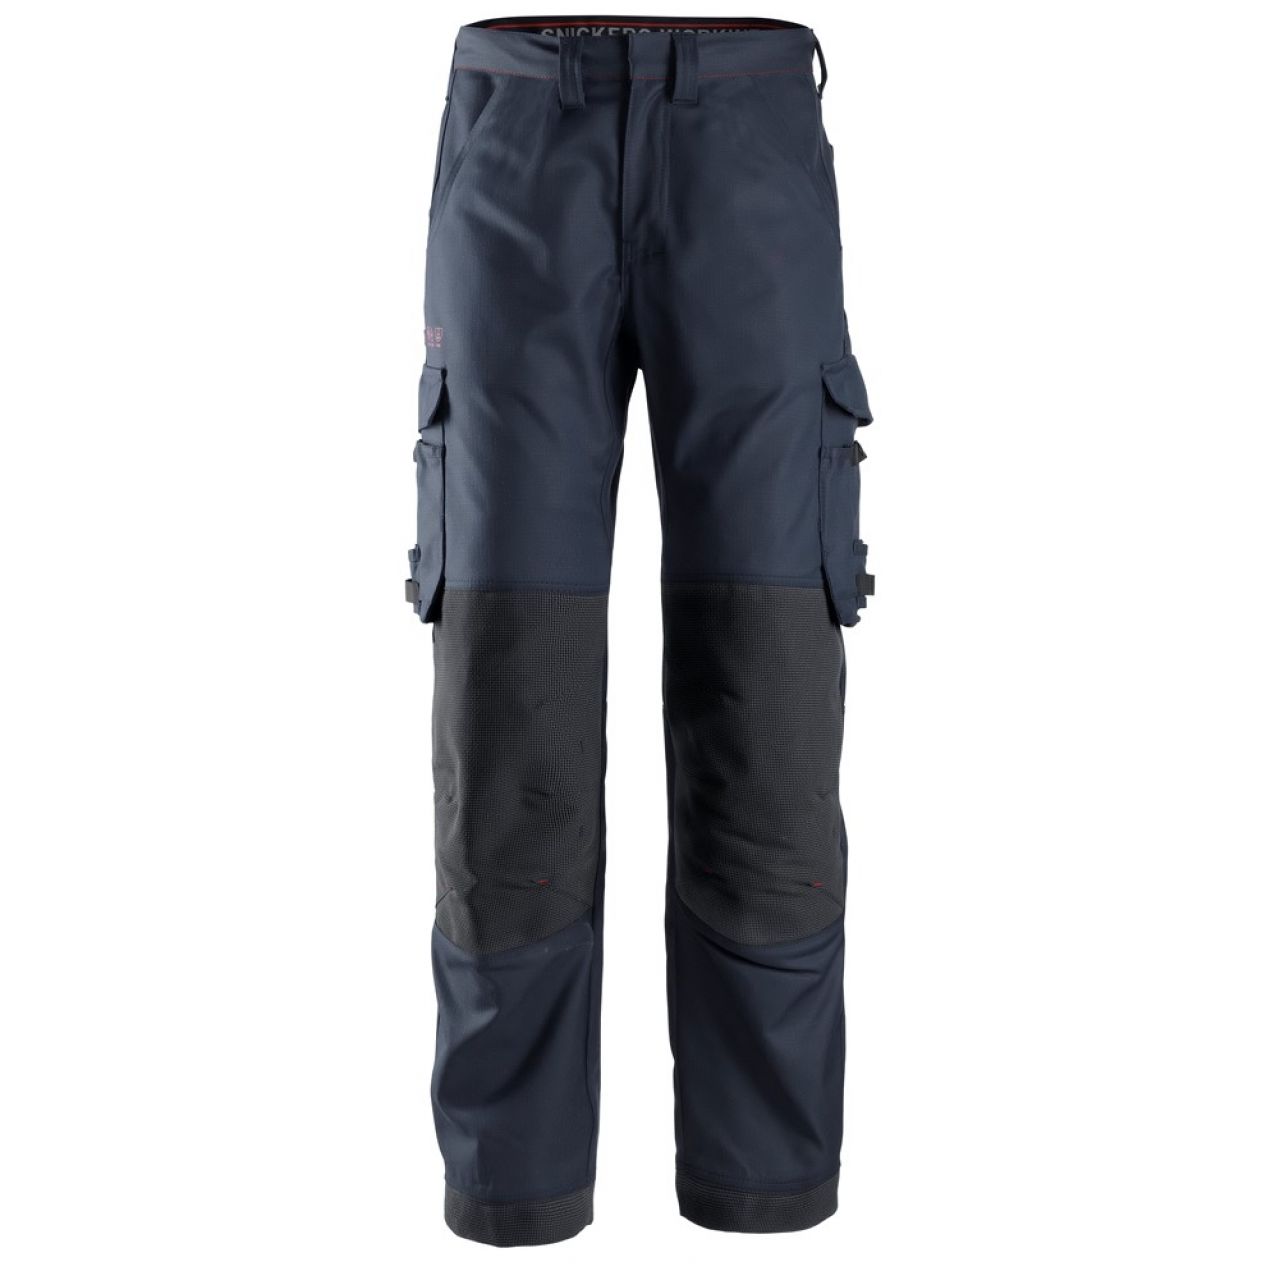 6362 Pantalones largos de trabajo con bolsillos simétricos ProtecWork azul marino talla 52